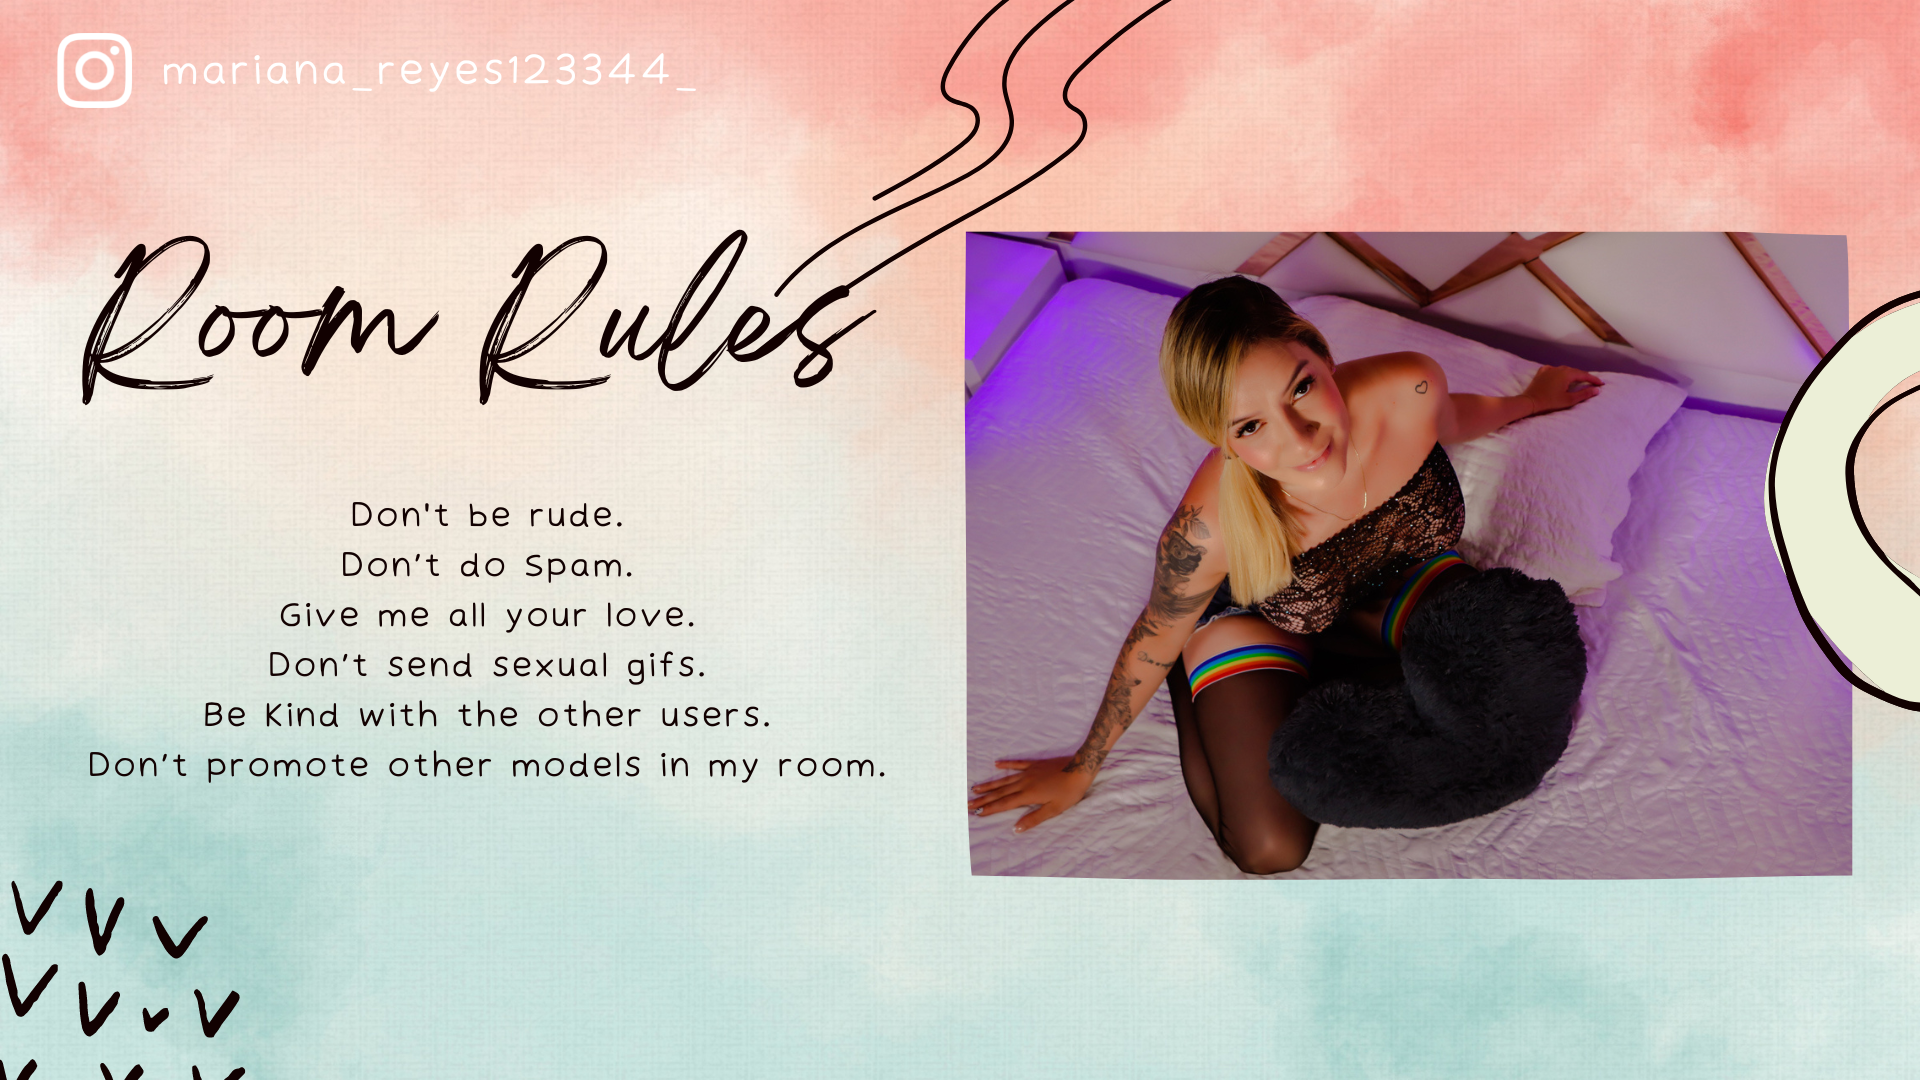 MarianaReyes Room  Rules image: 1